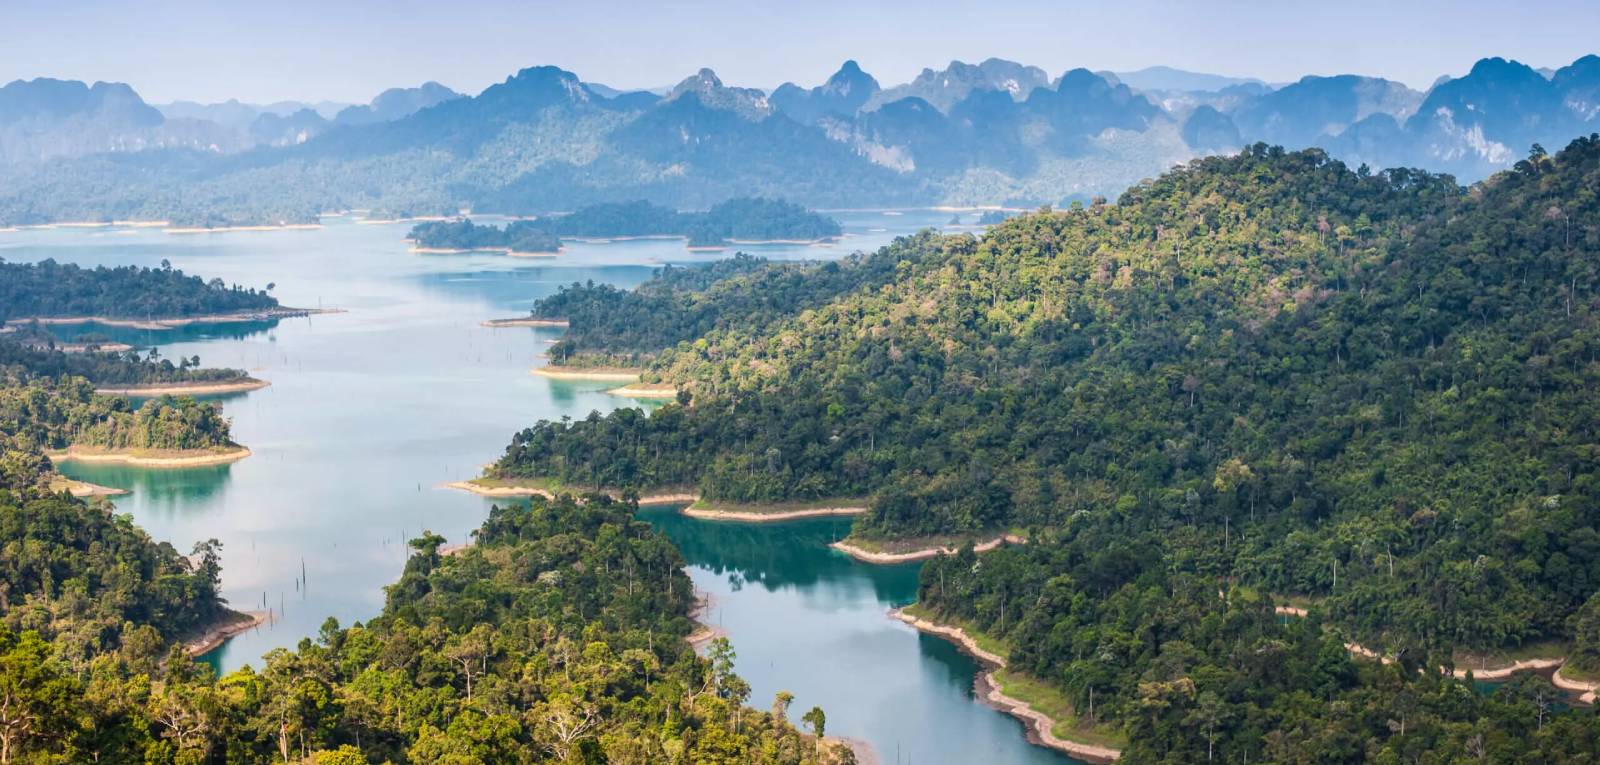 Khao Sok National Park in Thailand